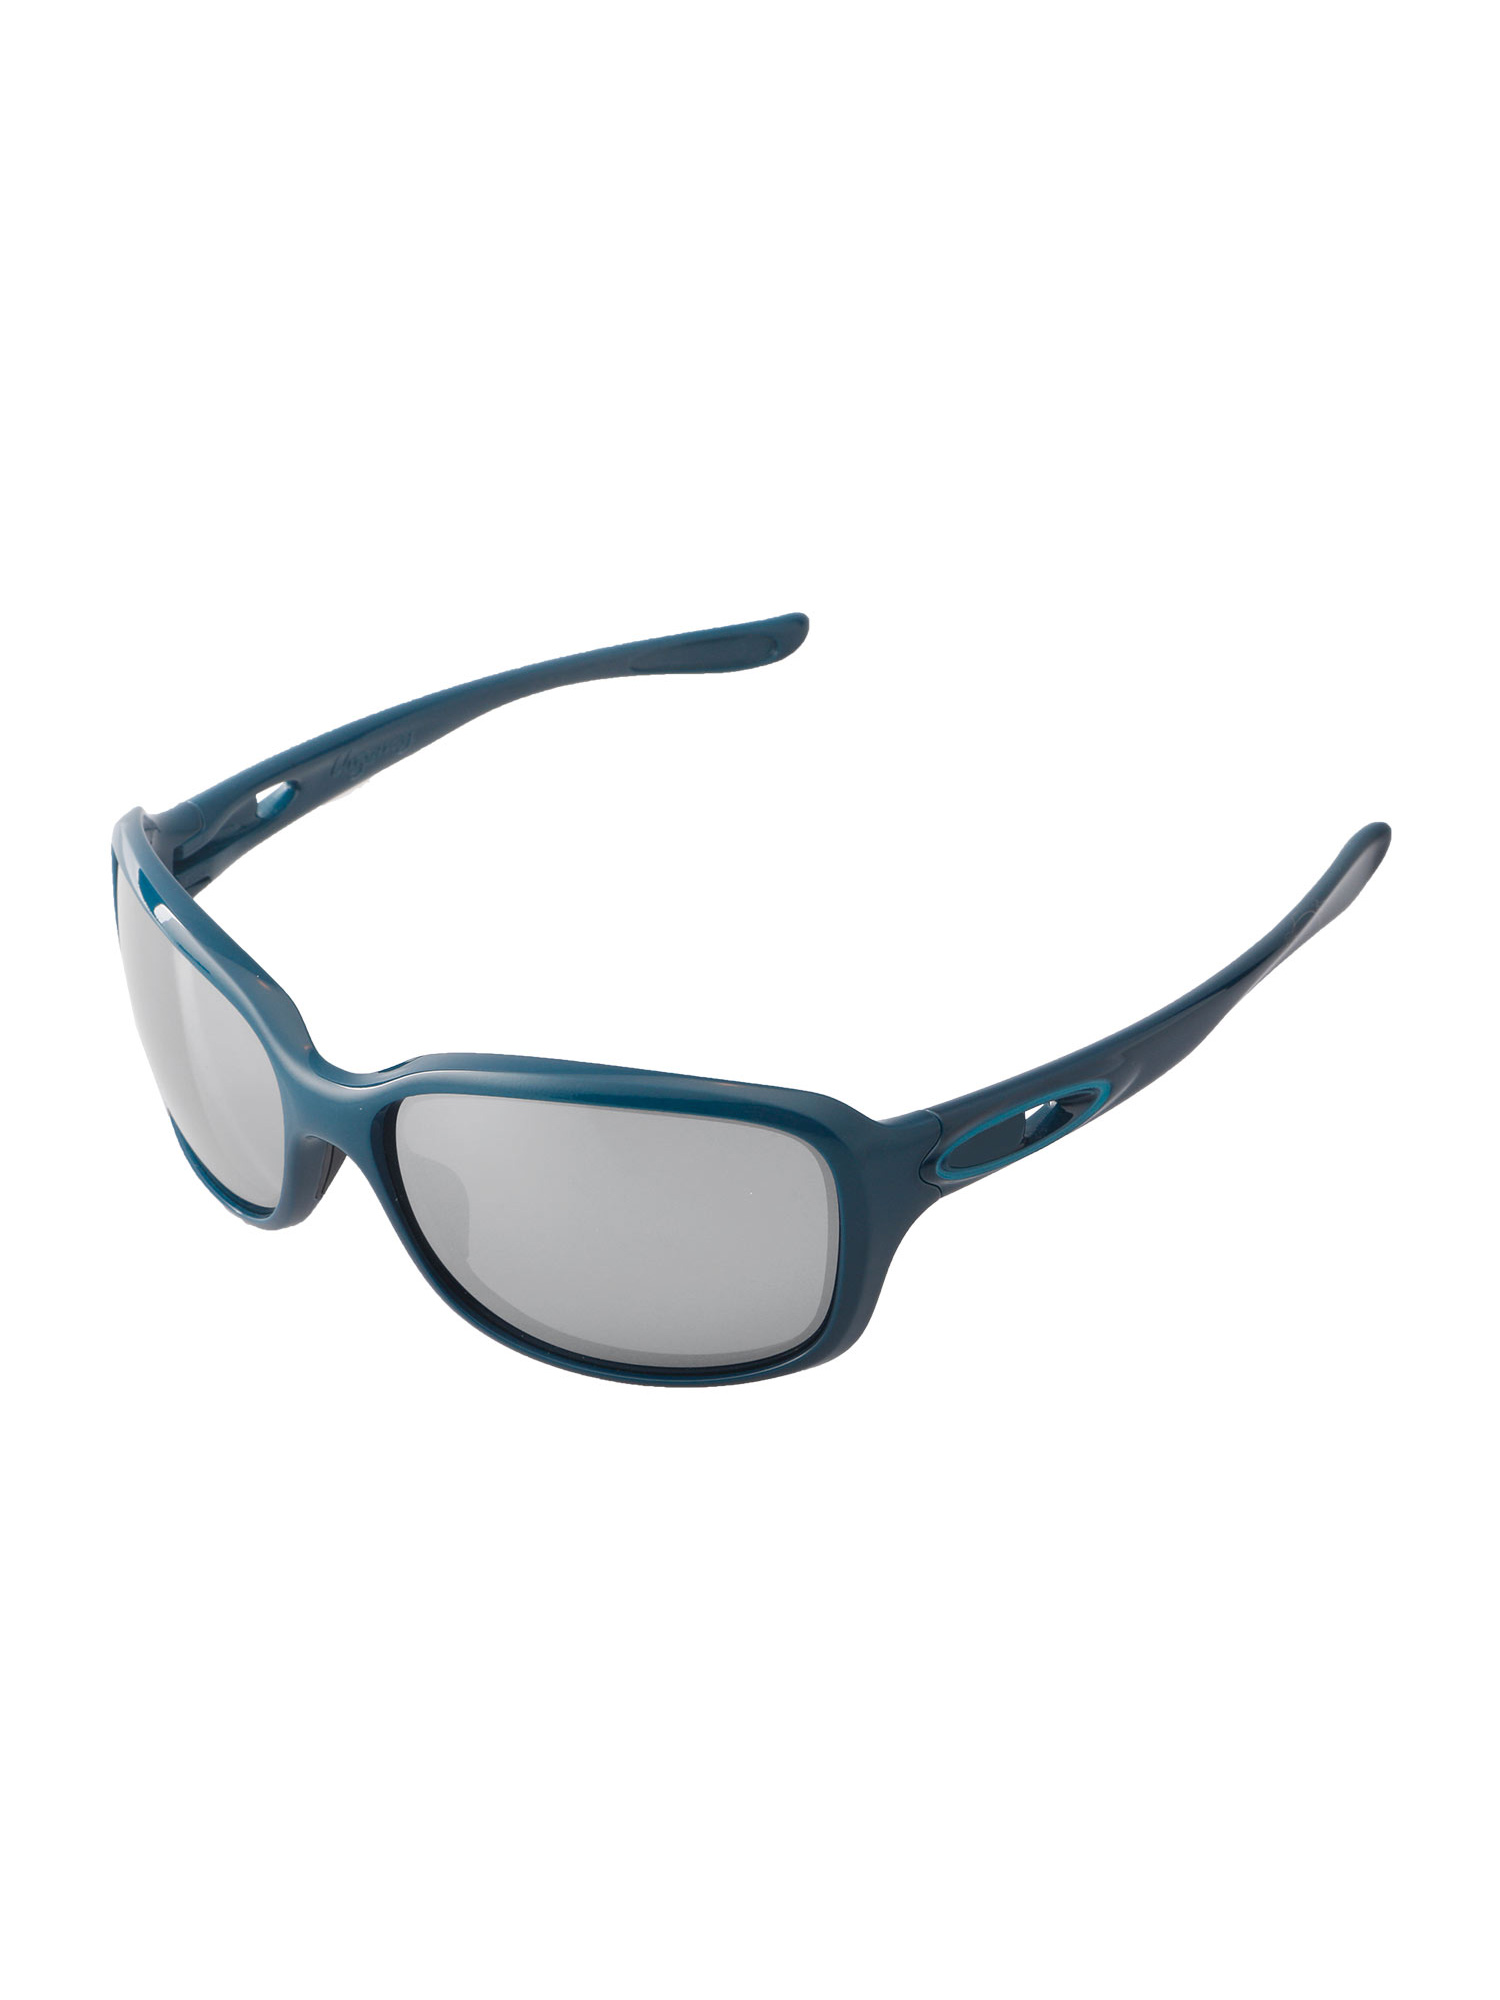 Walleva Titanium Polarized Replacement Lenses for Oakley Urgency Sunglasses - image 4 of 6